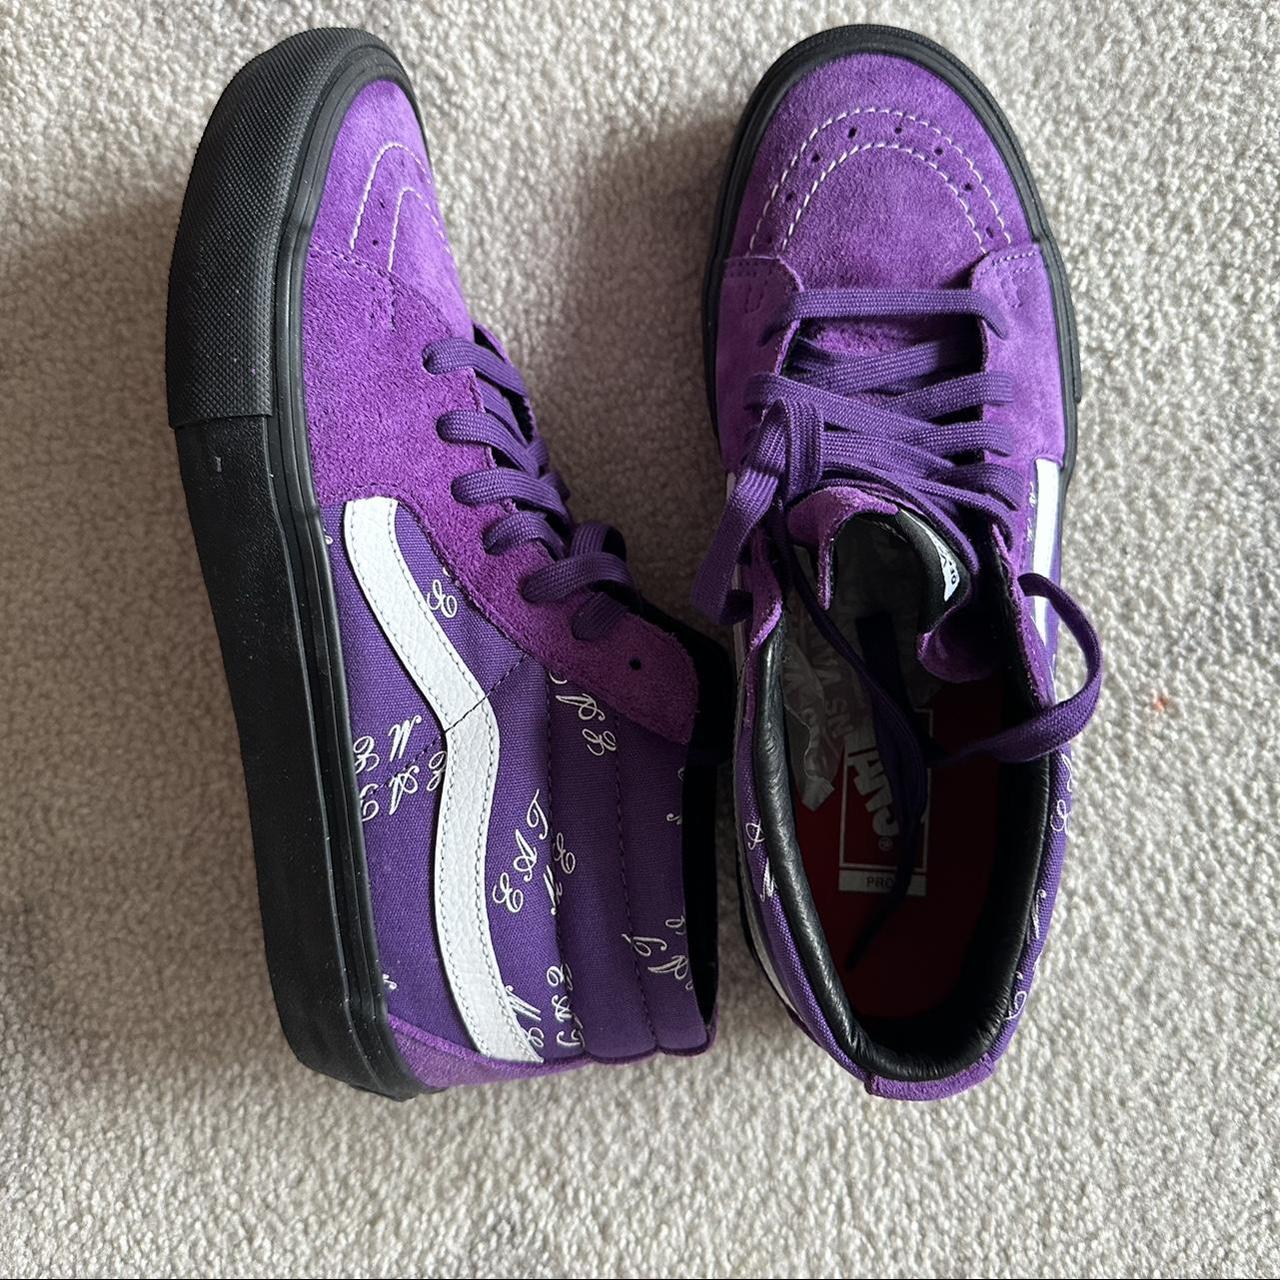 Vans X Supreme ‘Eat Me’ Sk8 mid top shoes in purple....